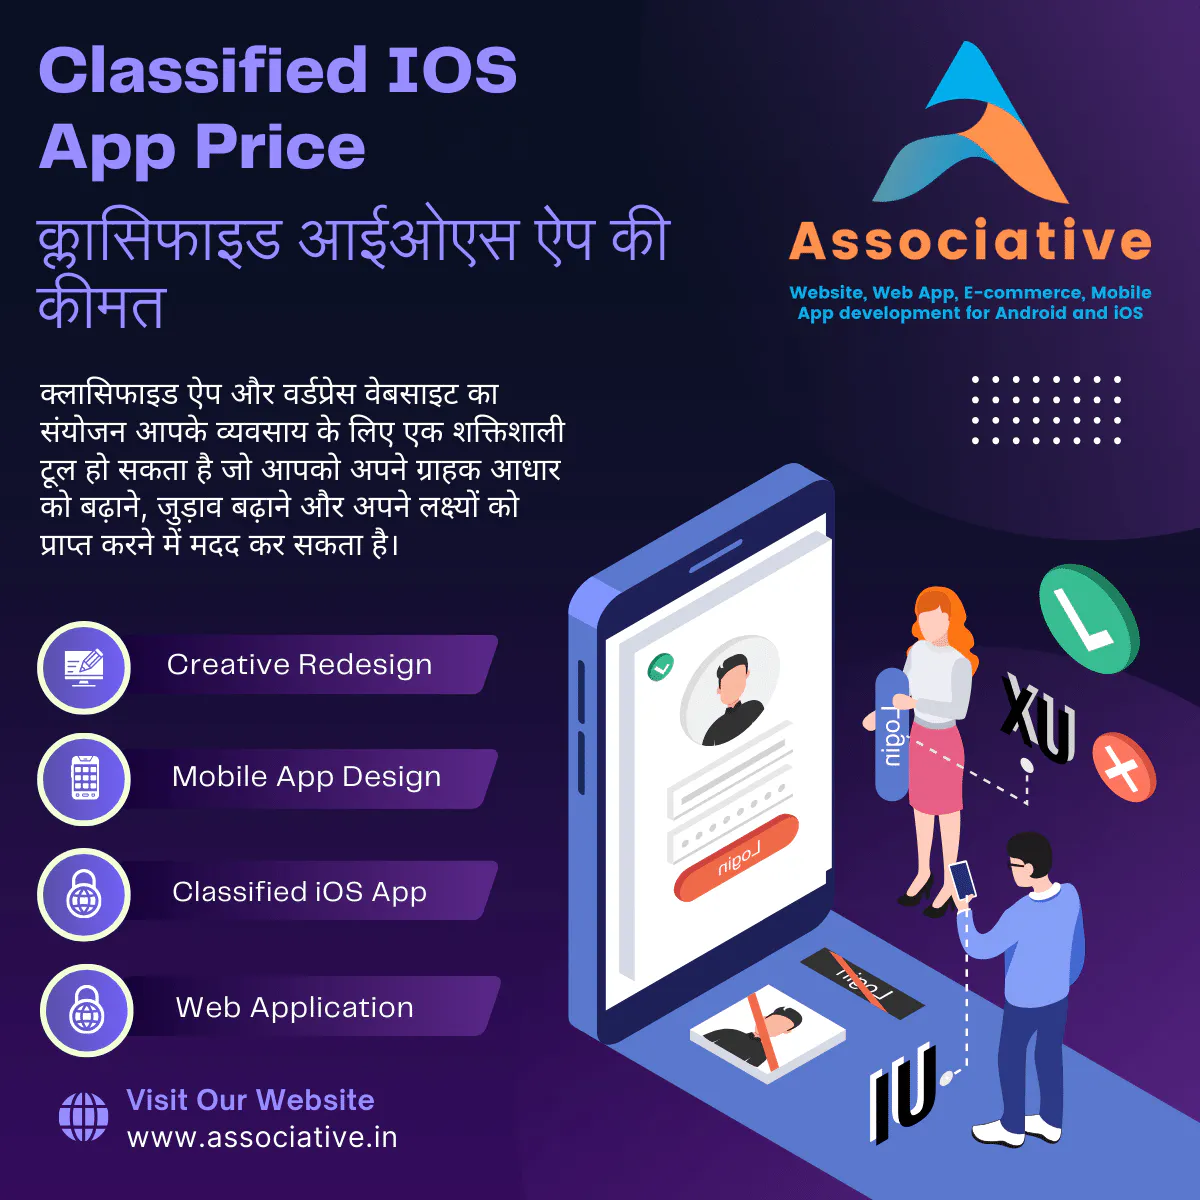 Classified IOS App